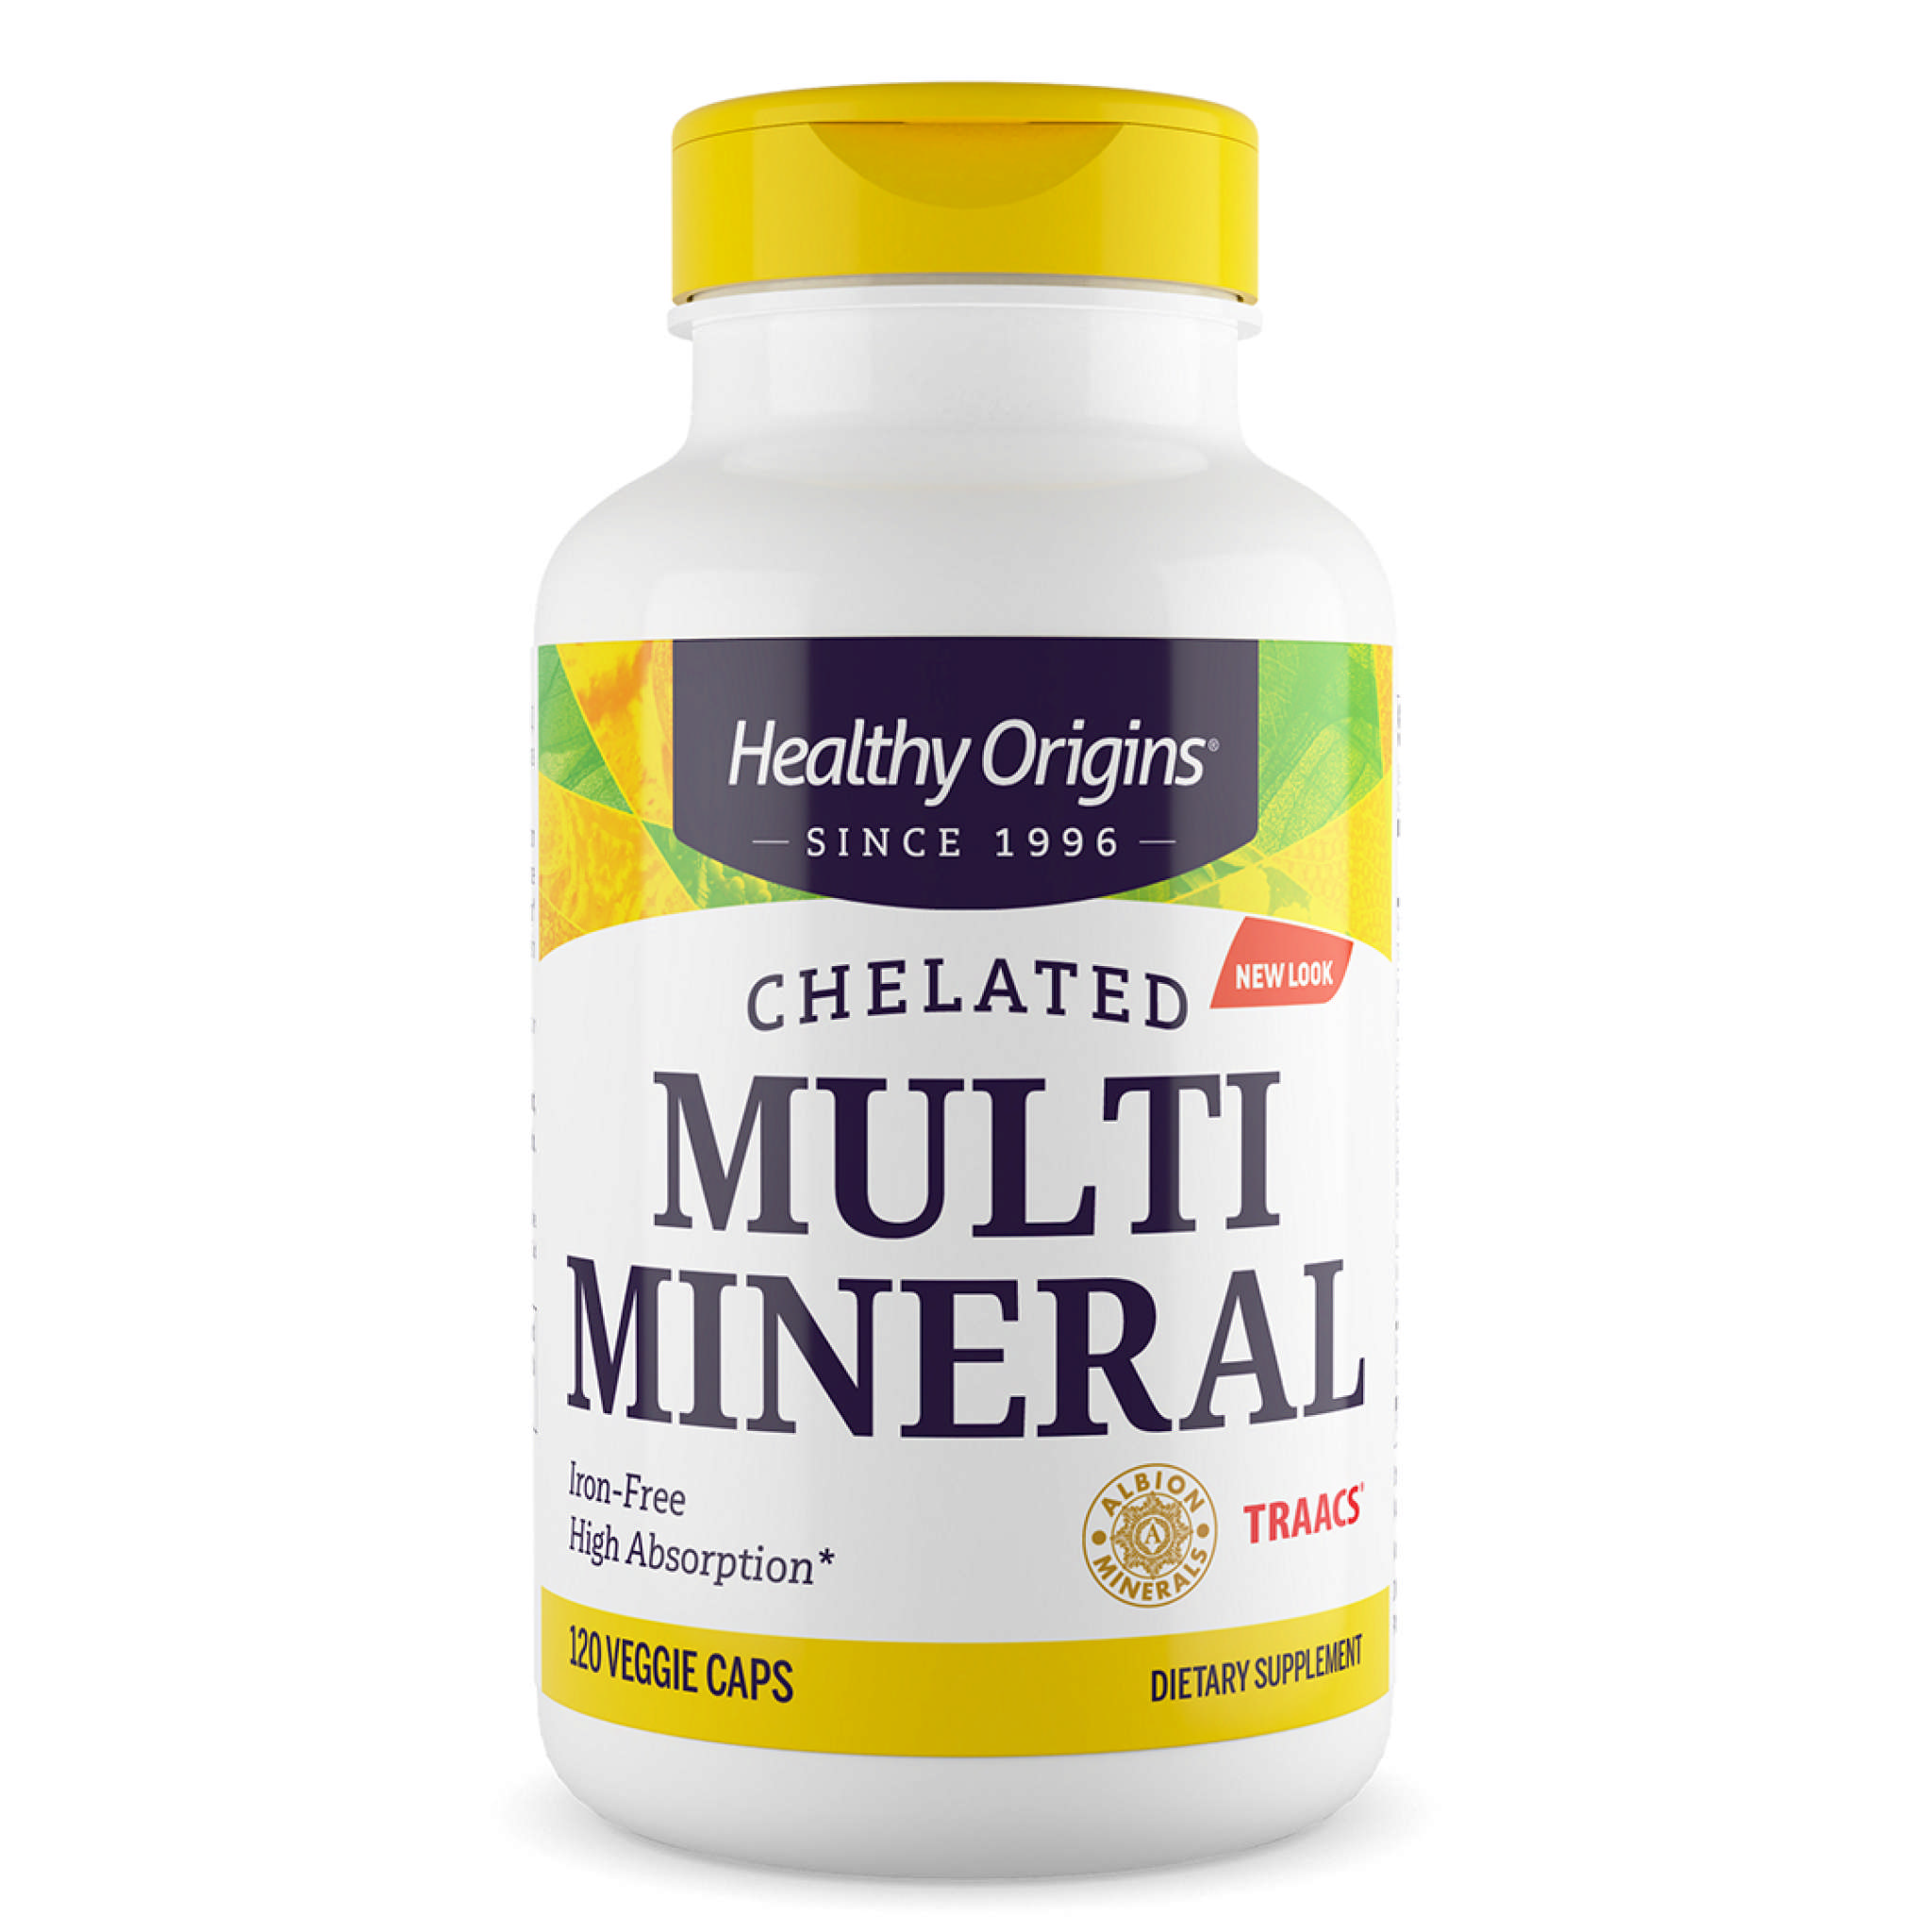 Healthy Origins - Multi Mineral Chel Albion